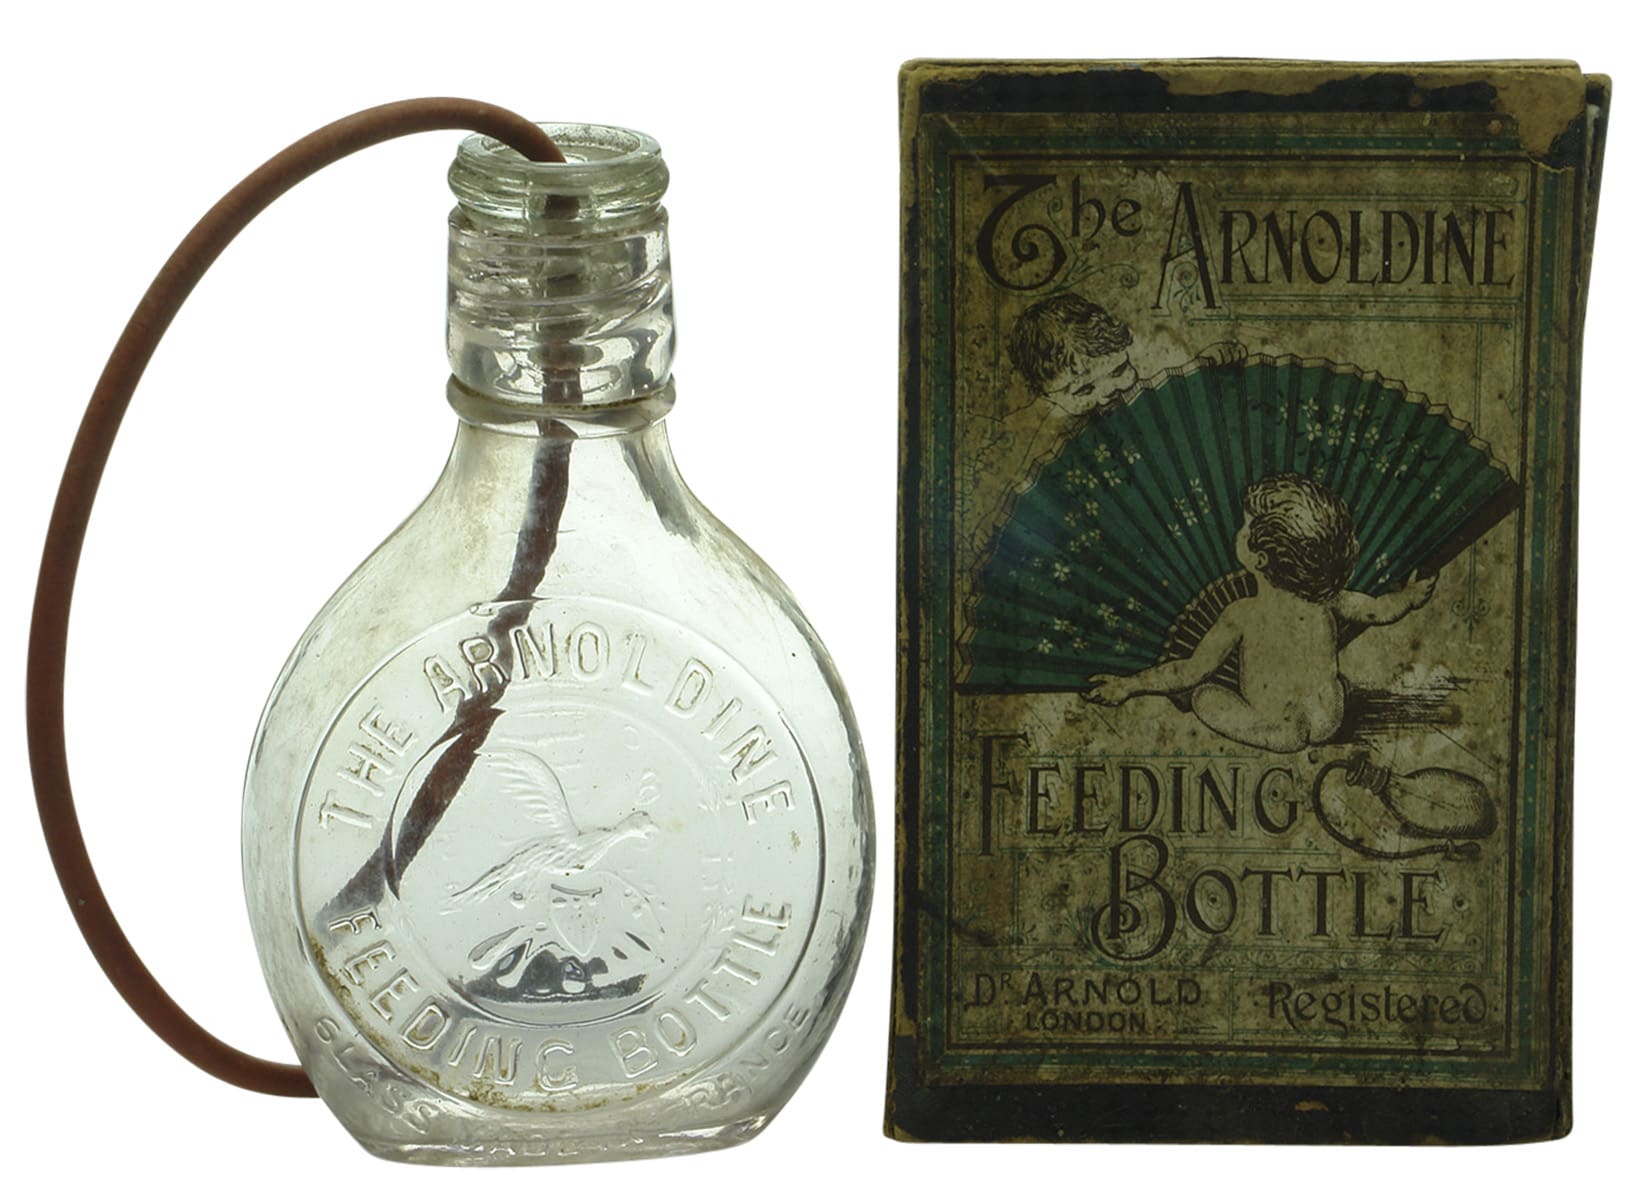 Arnoldine Feeding Bottle Original Box Bottle